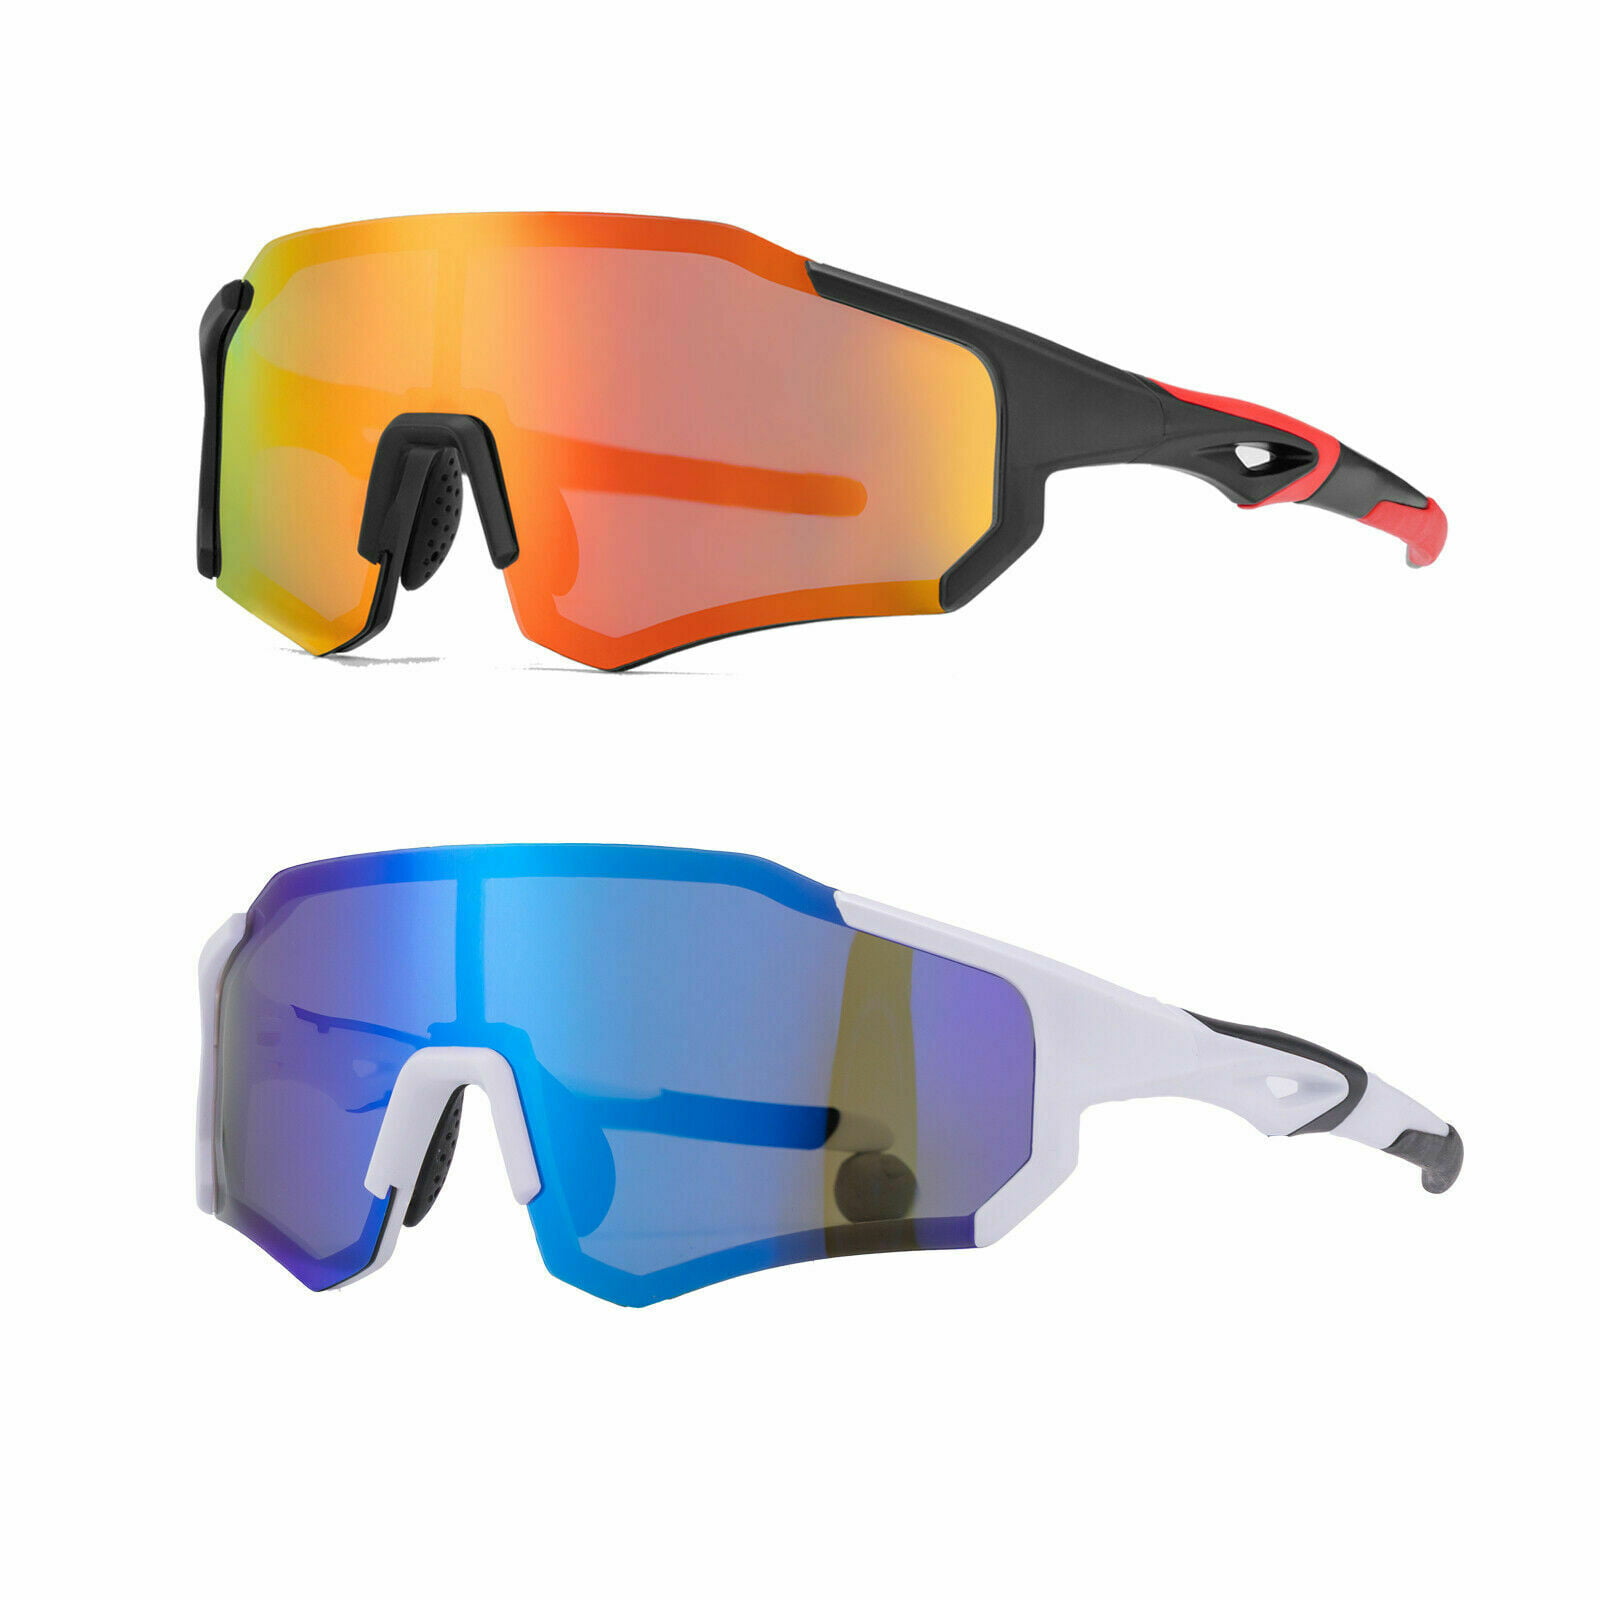 RockBros Polarized Cycling Sunglasses Bike Goggles Eyewear Sport Glasses UV400 